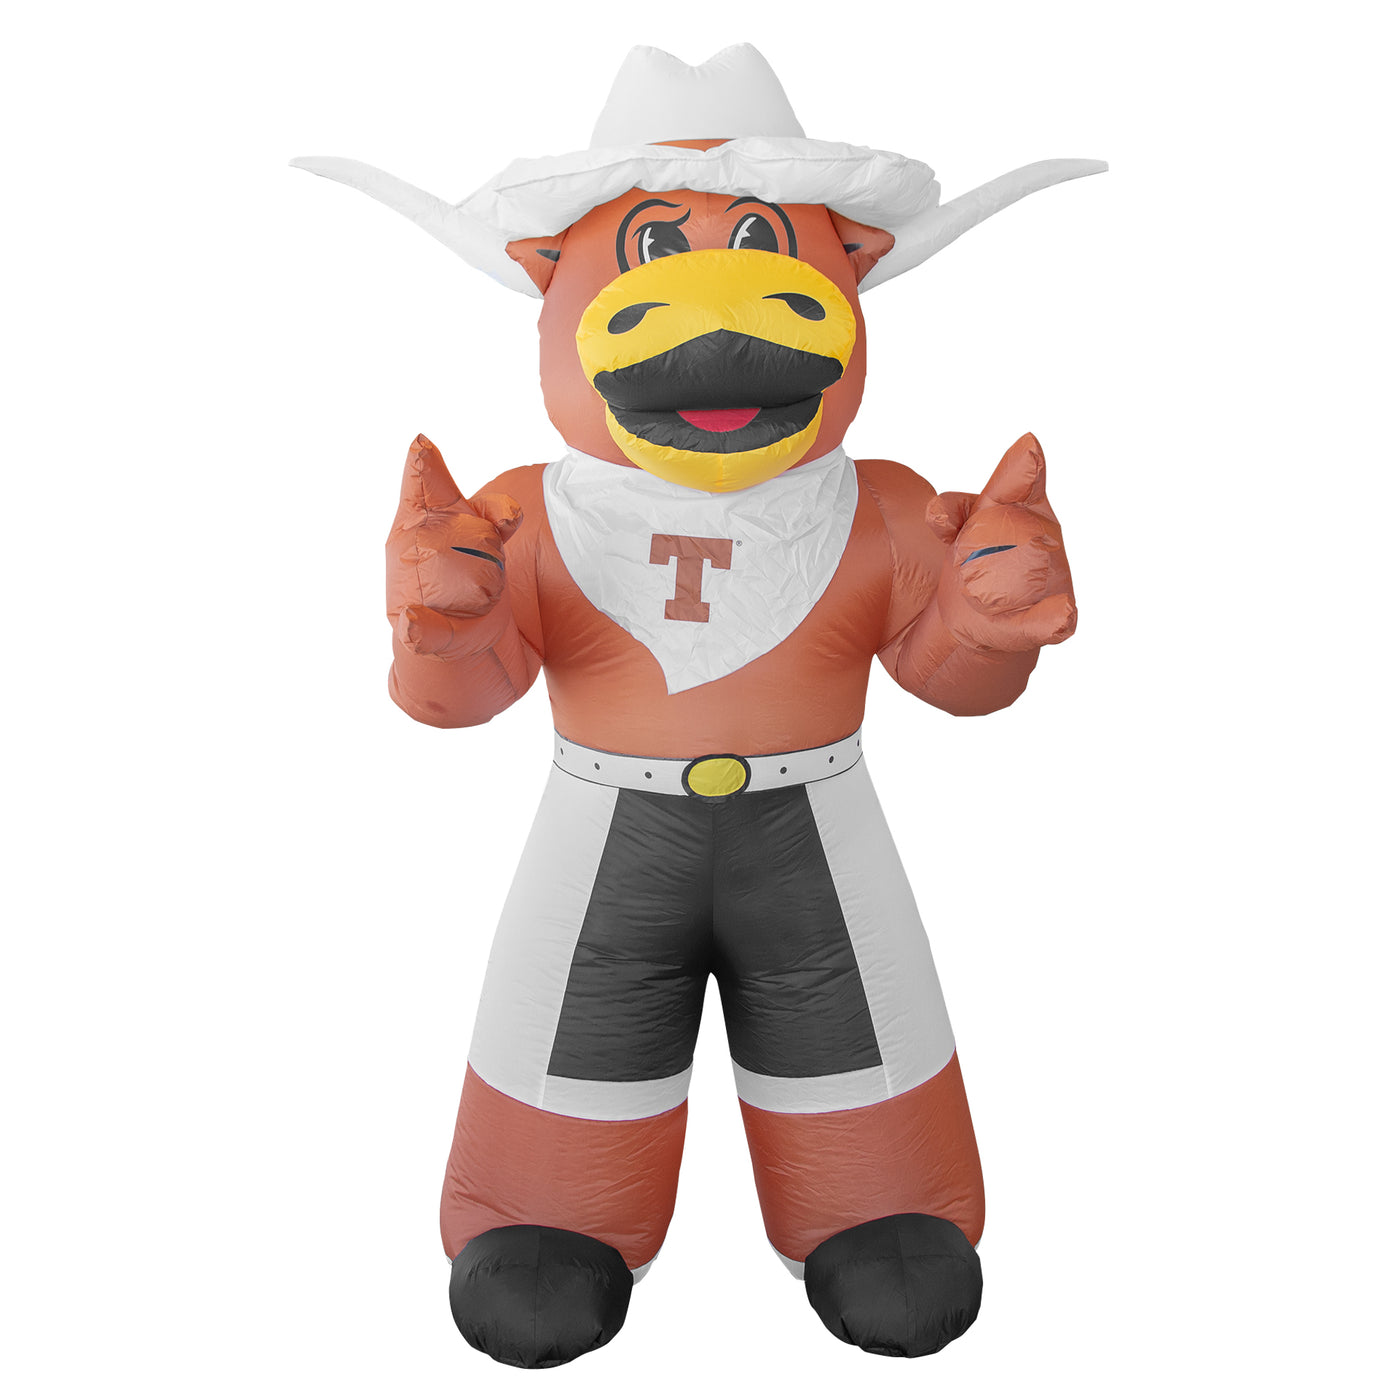 Texas Inflatable Mascot